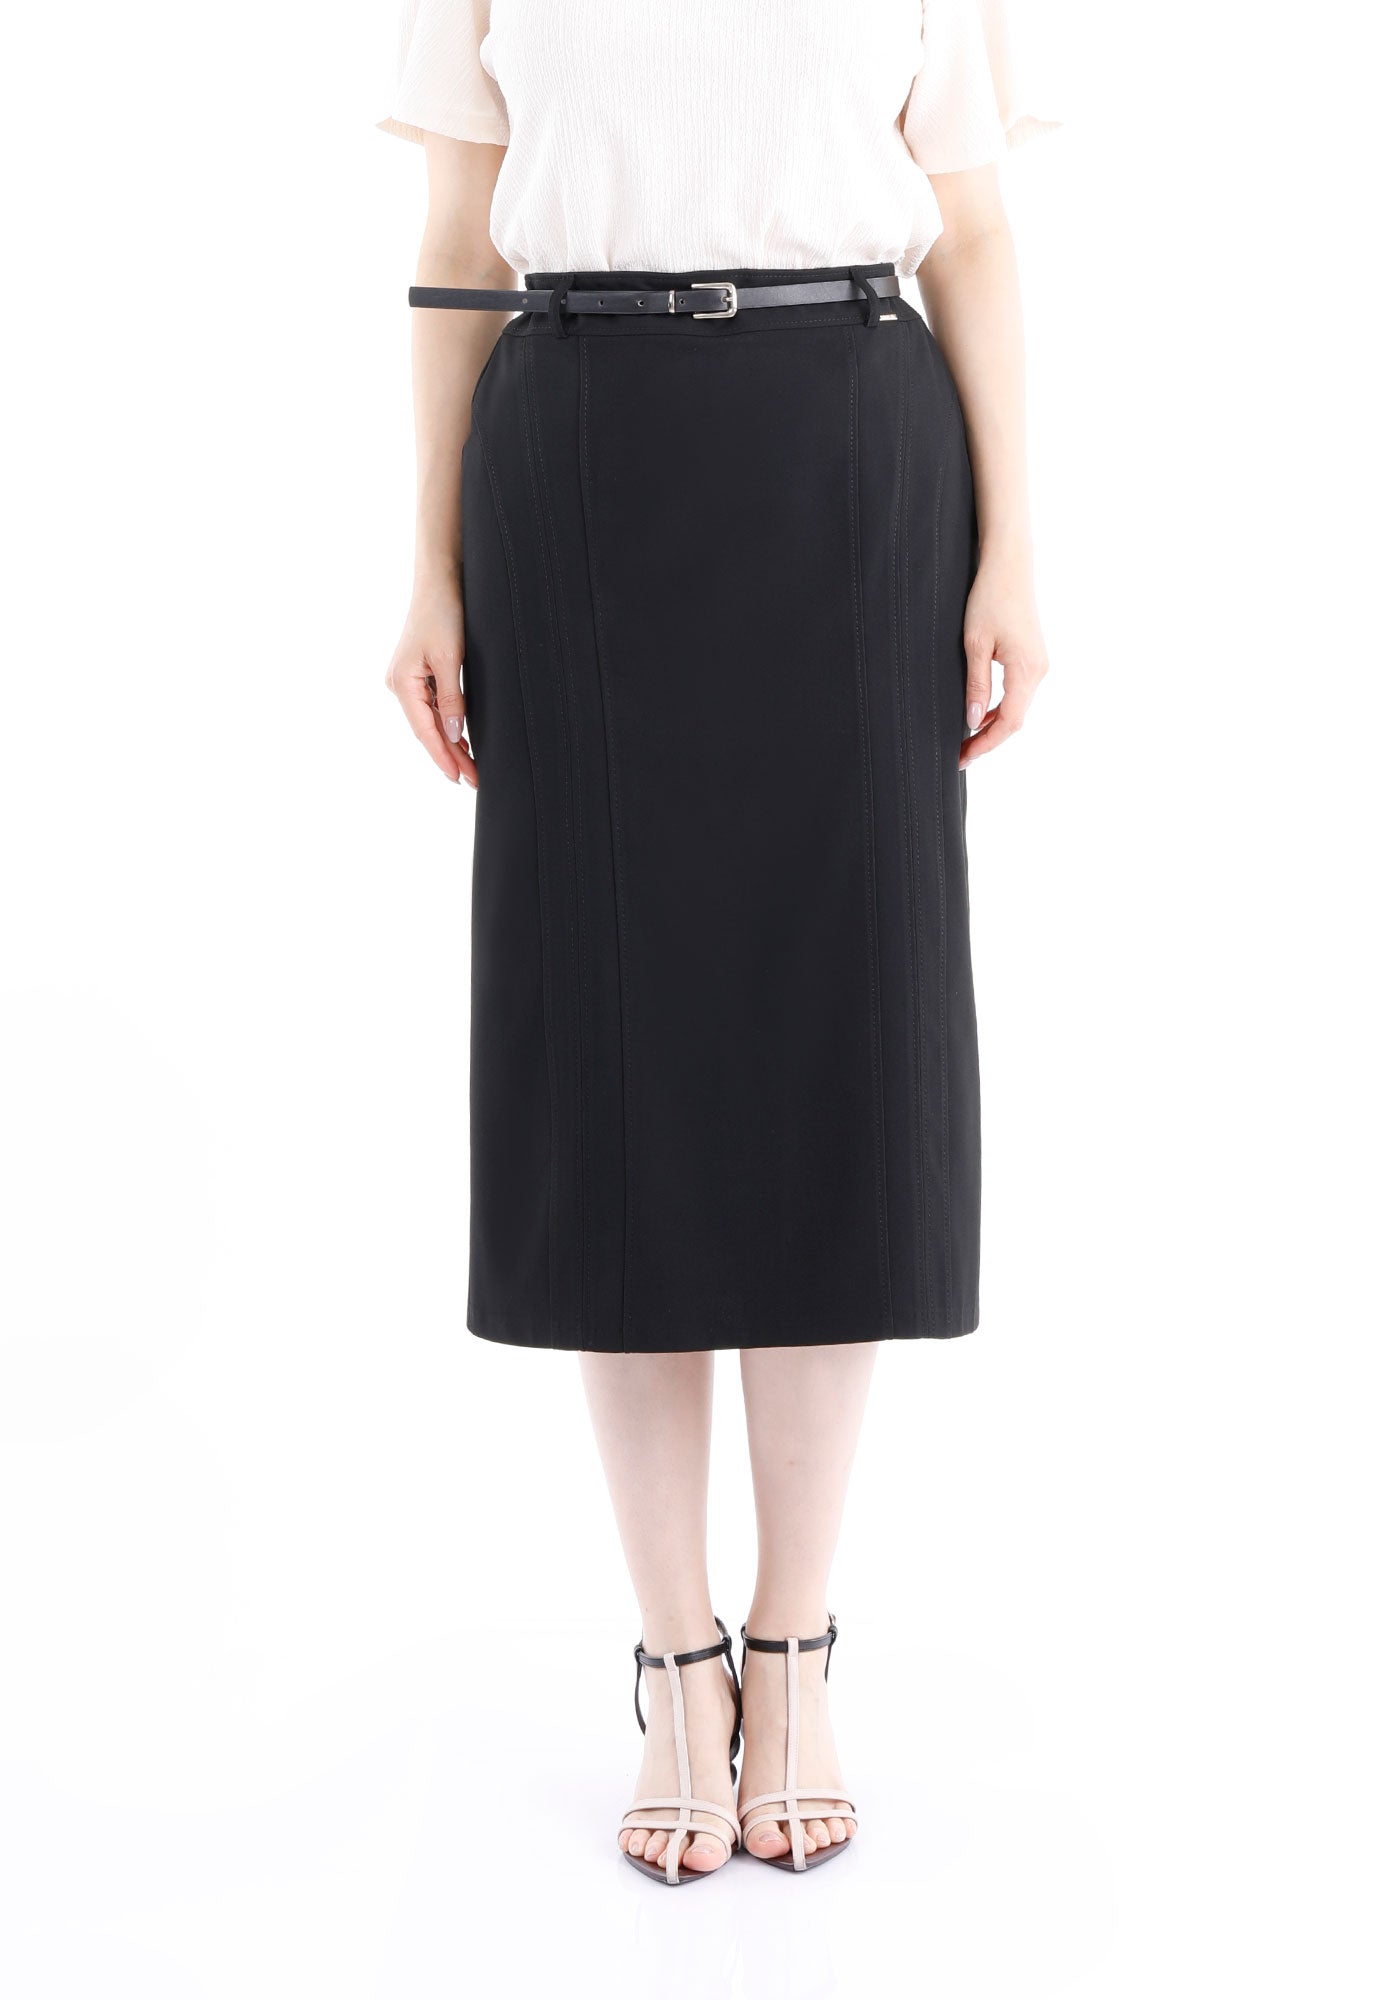 Guzella Women's Classic Black High Waisted Midi Pencil Skirt with Belt Guzella